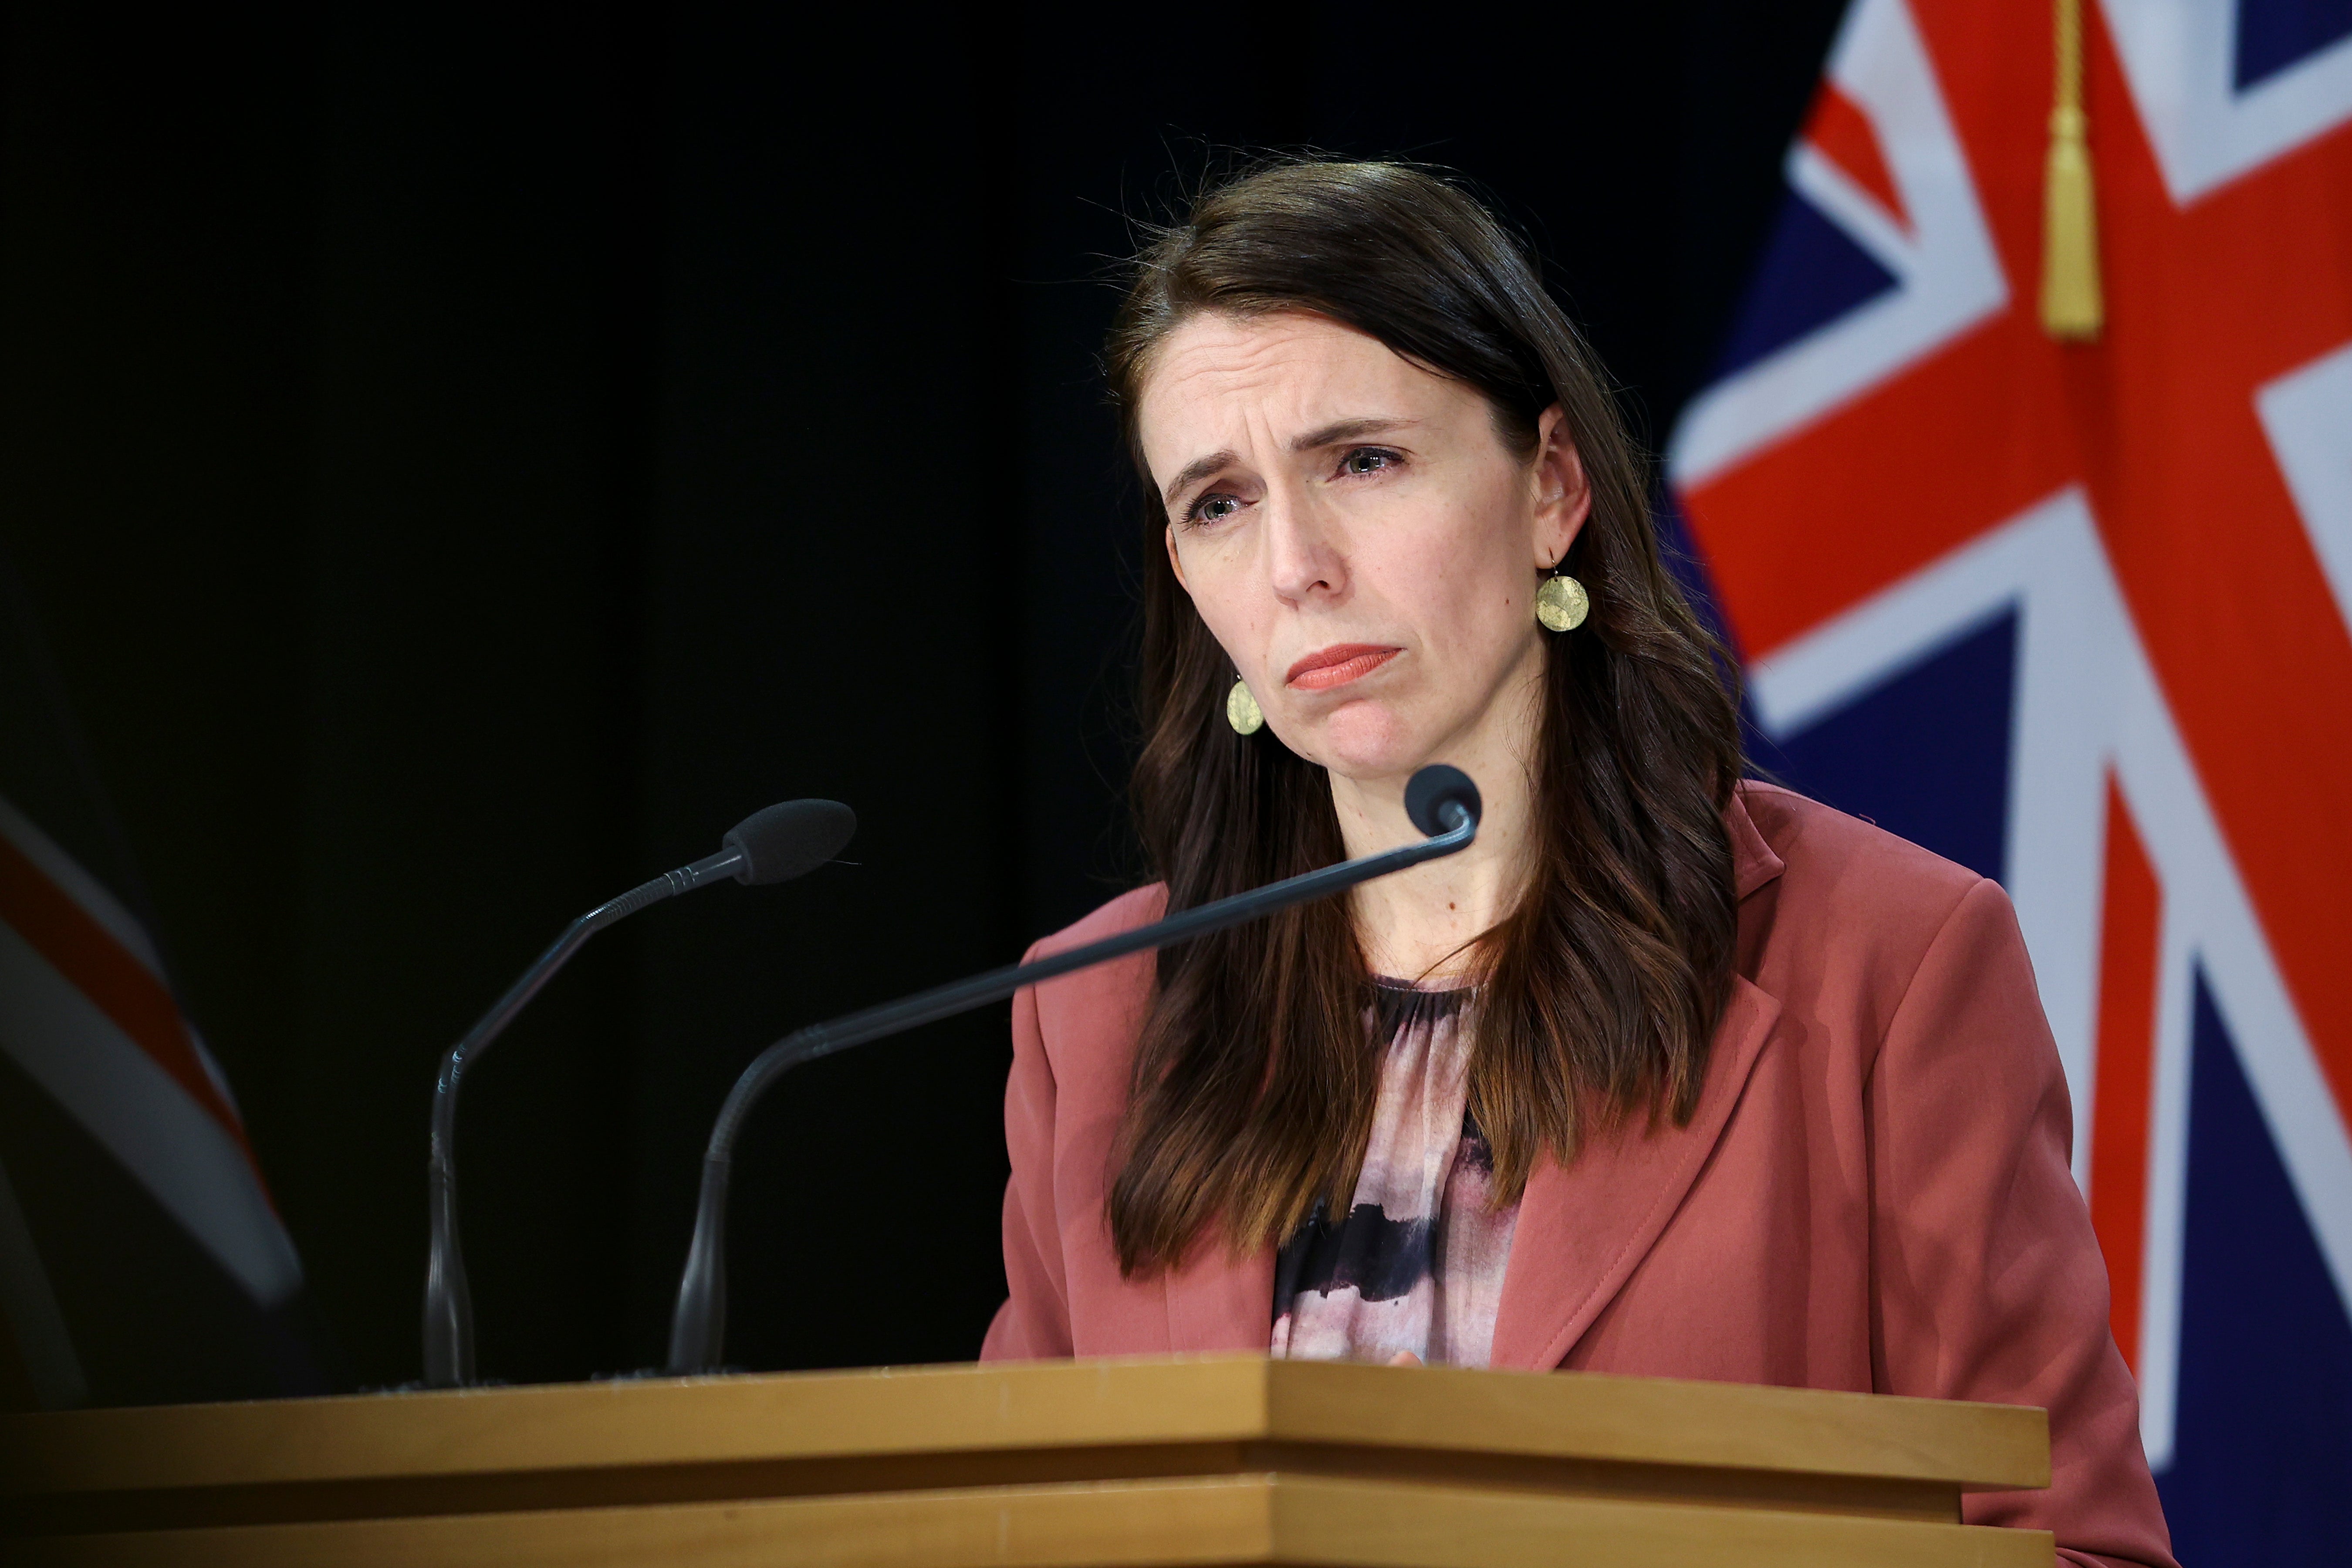 On the case: Prime minister Jacinda Ardern has reintroduced lockdown measures across New Zealand